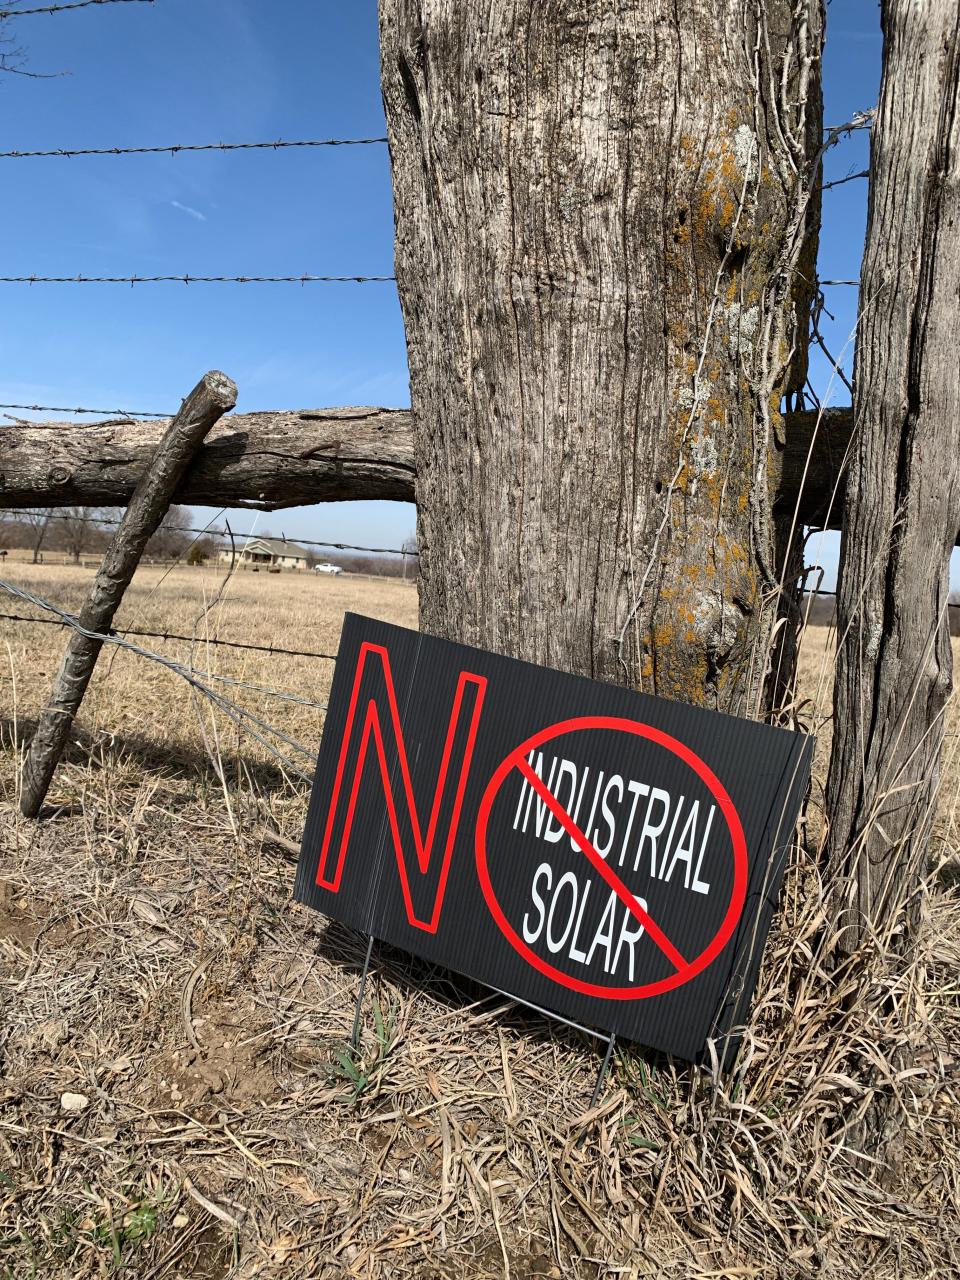 A sign opposing a solar power installation in rural Kansas.